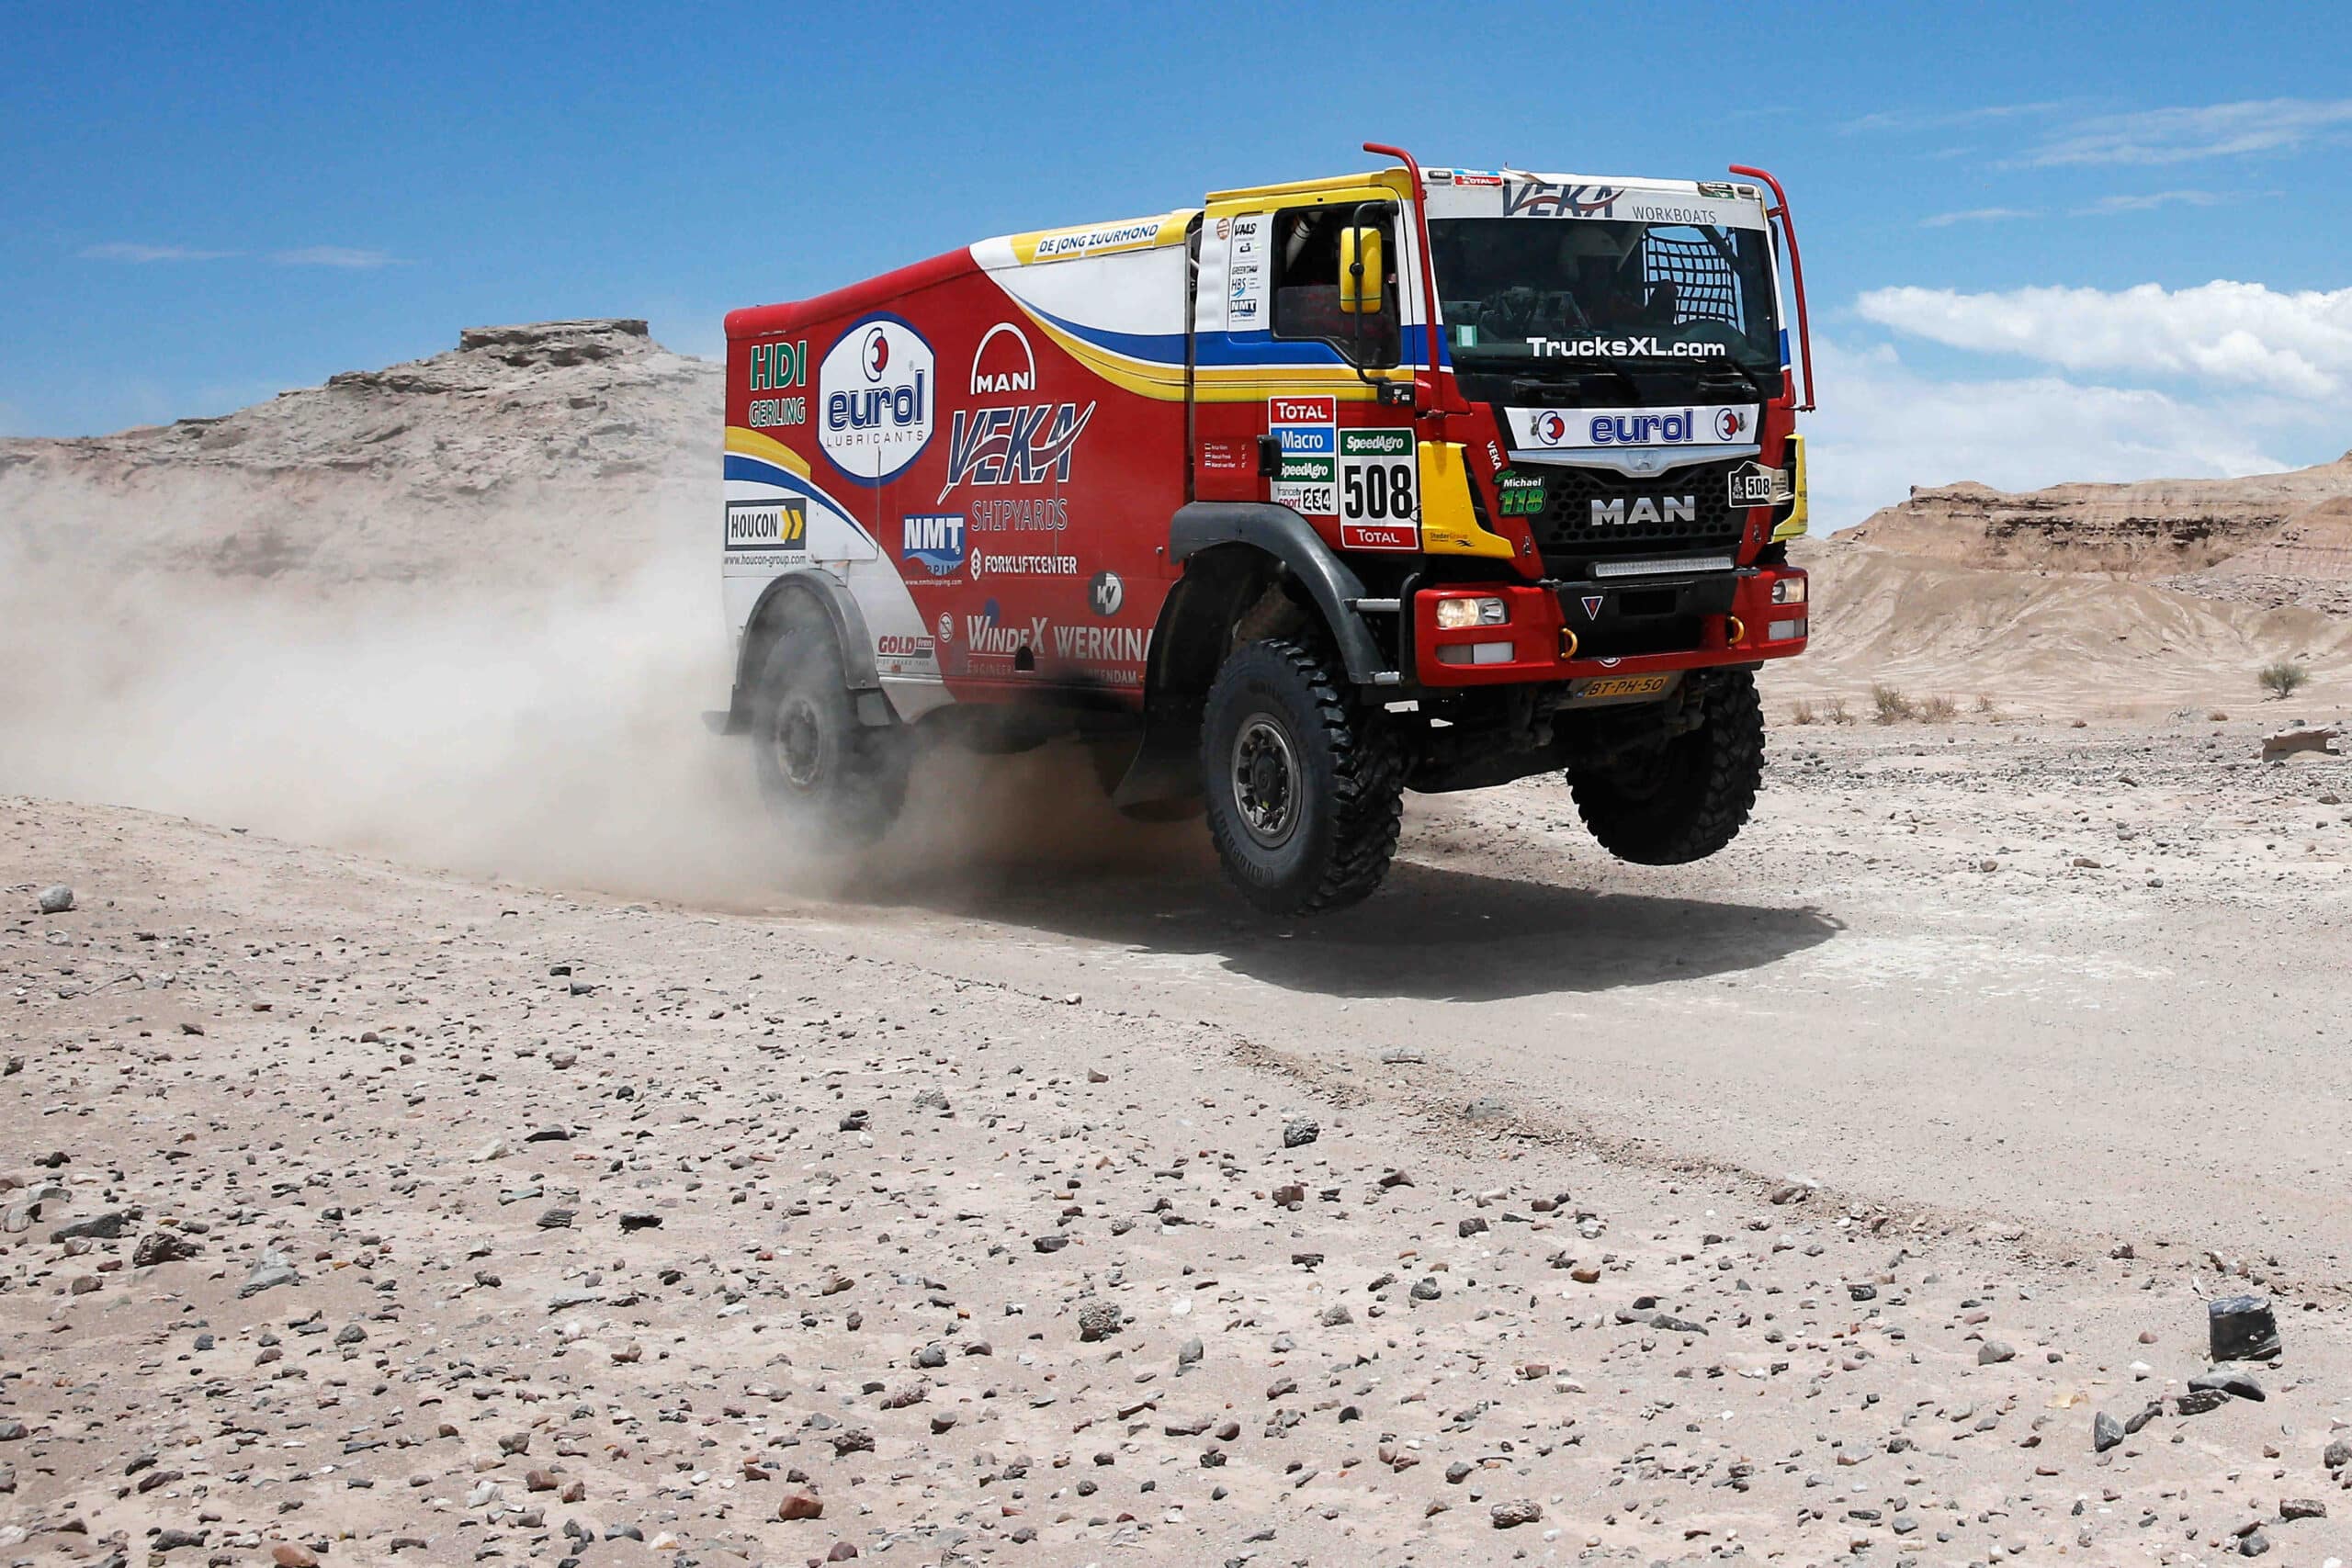 Quelle chaîne diffuse le Dakar 2021 ?